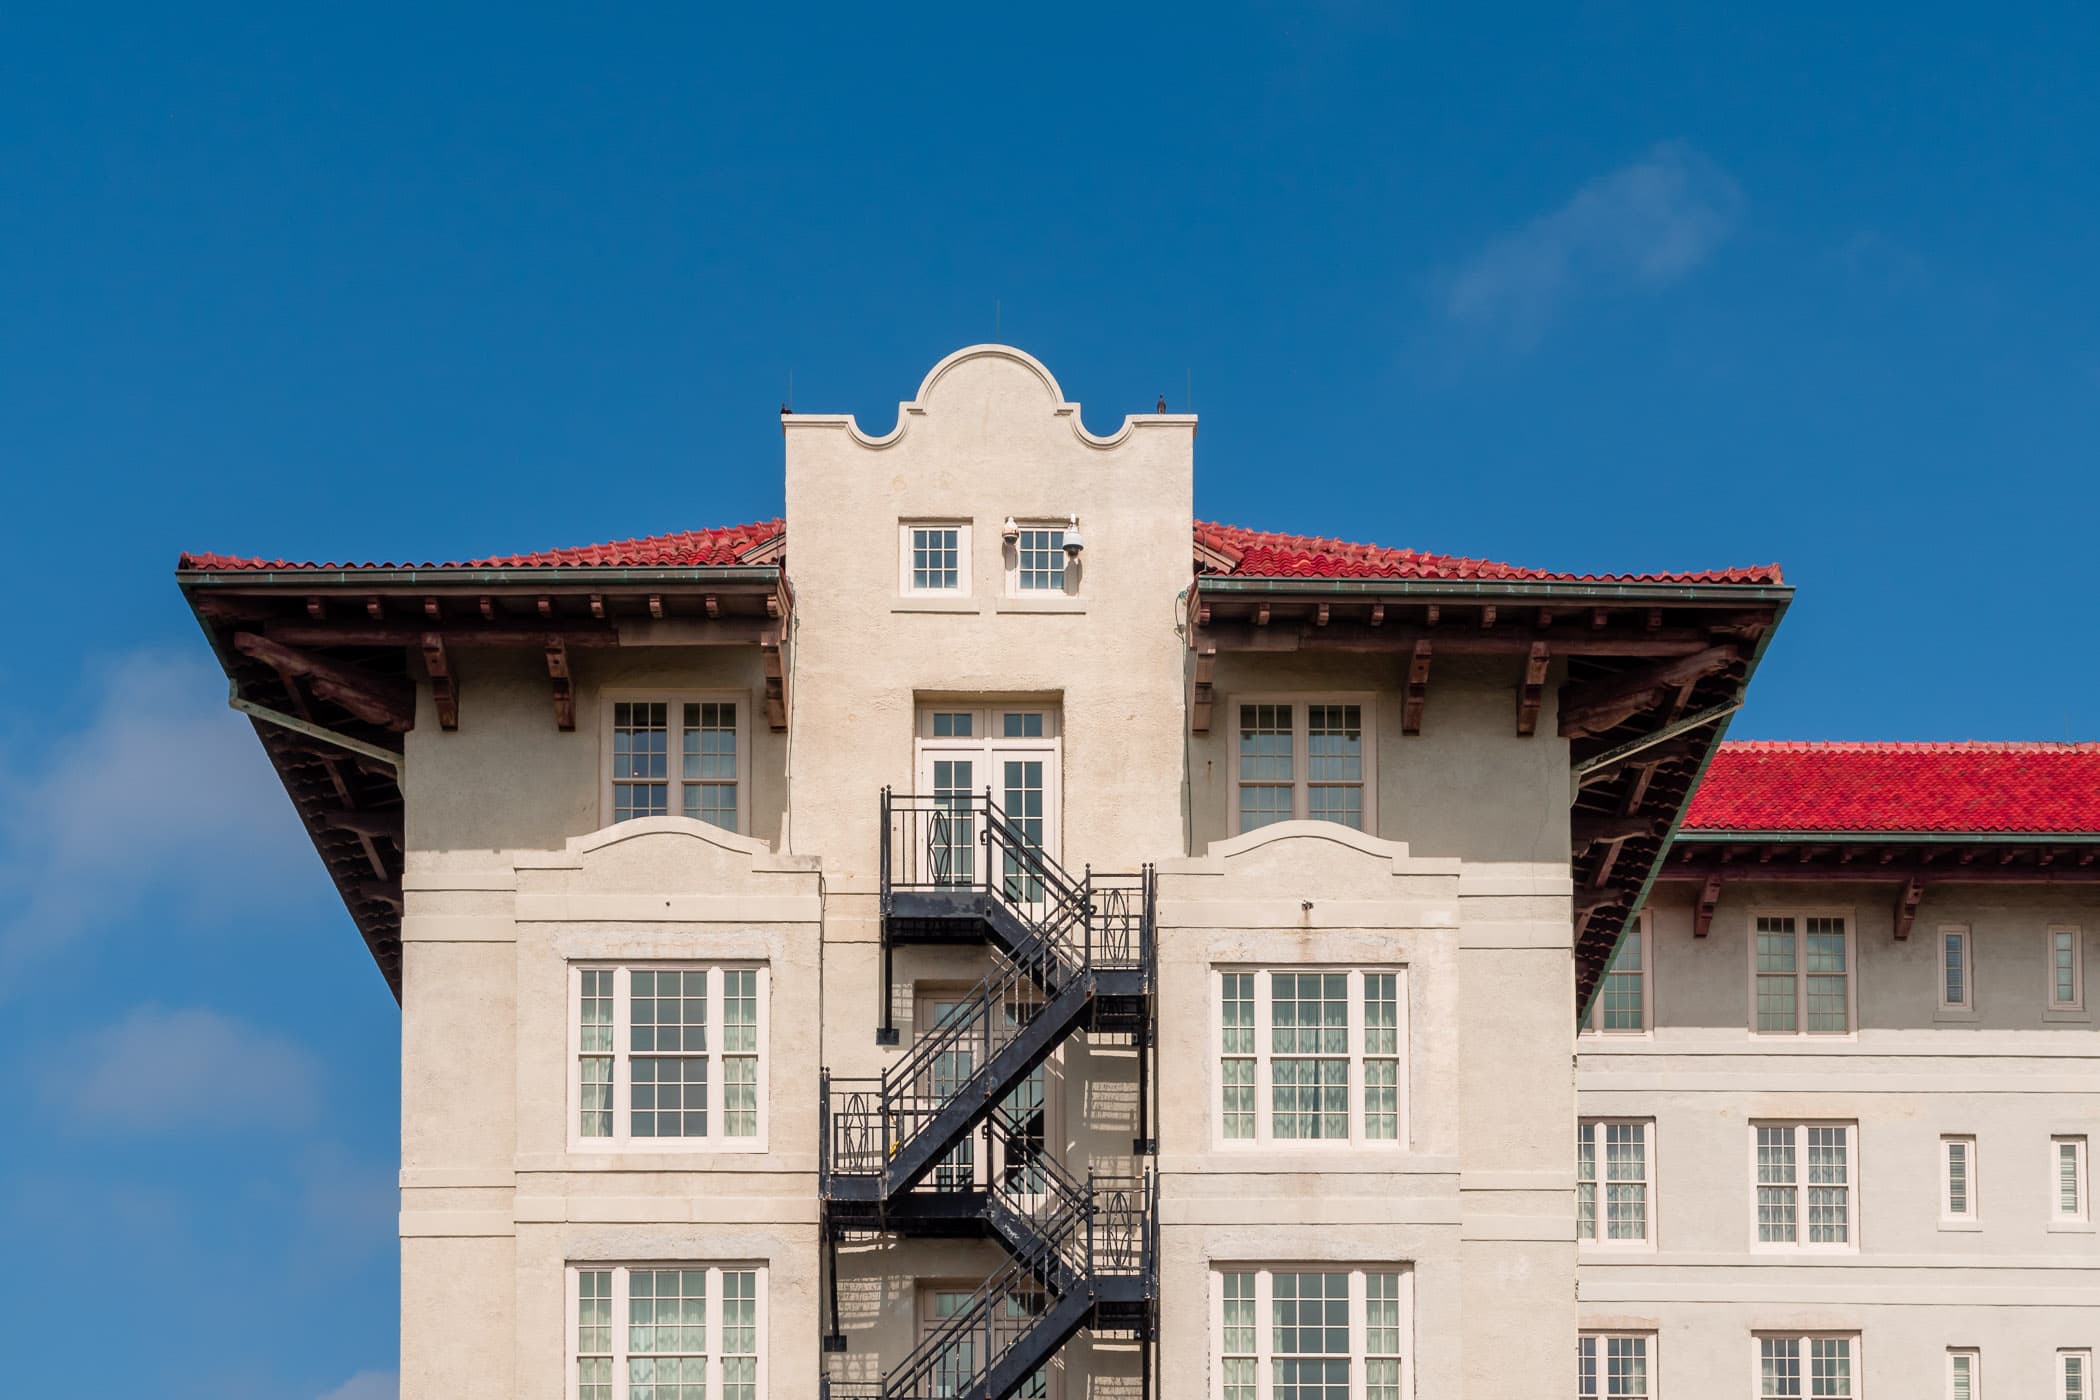 Architectural detail of the historic Hotel Galvez, Galveston, Texas.